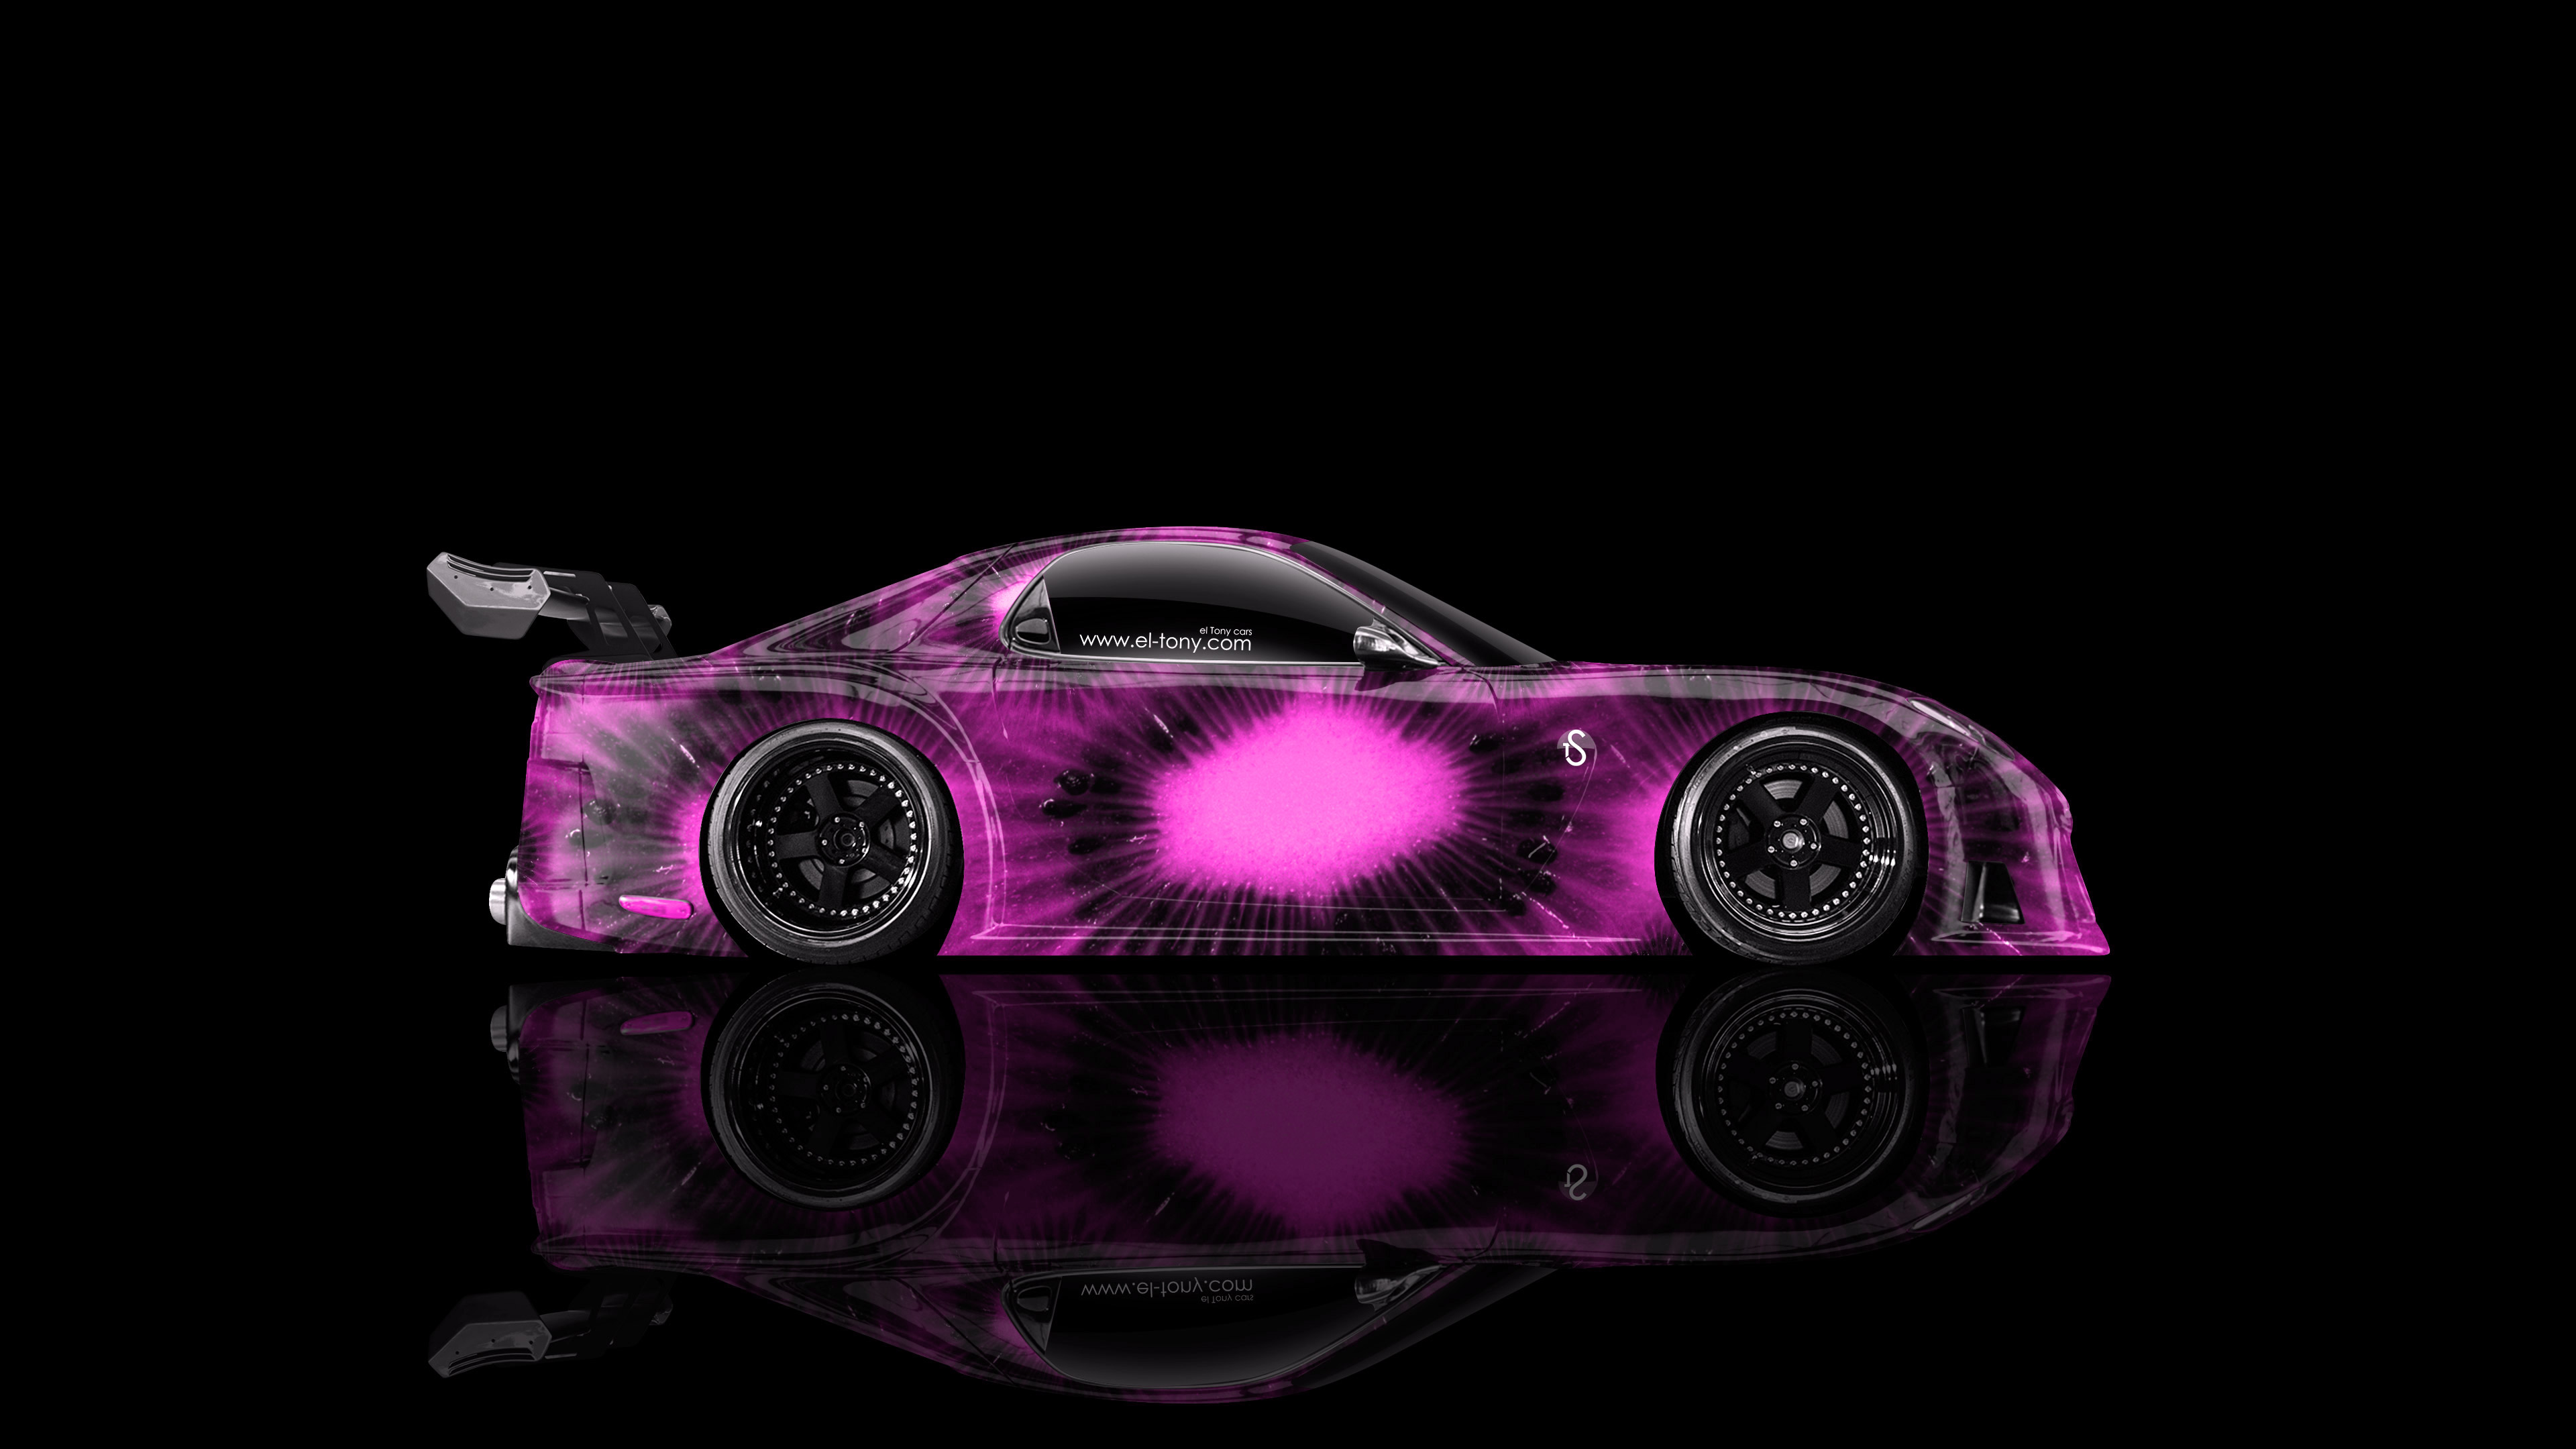 Free download VeilSide JDM Side Kiwi Aerography Car 2014 Pink Colors 4K Wallpaper [3840x2160] for your Desktop, Mobile & Tablet. Explore 4K JDM WallpaperK JDM Wallpaper, Jdm Wallpaper, Jdm Wallpaper